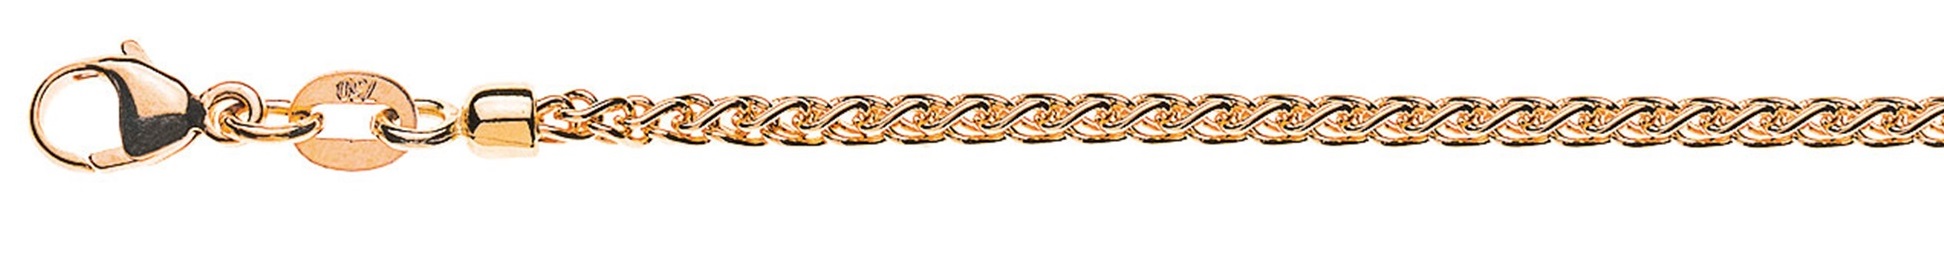 AURONOS Prestige Halskette Roségold 18K Zopfkette 42cm 2.15mm